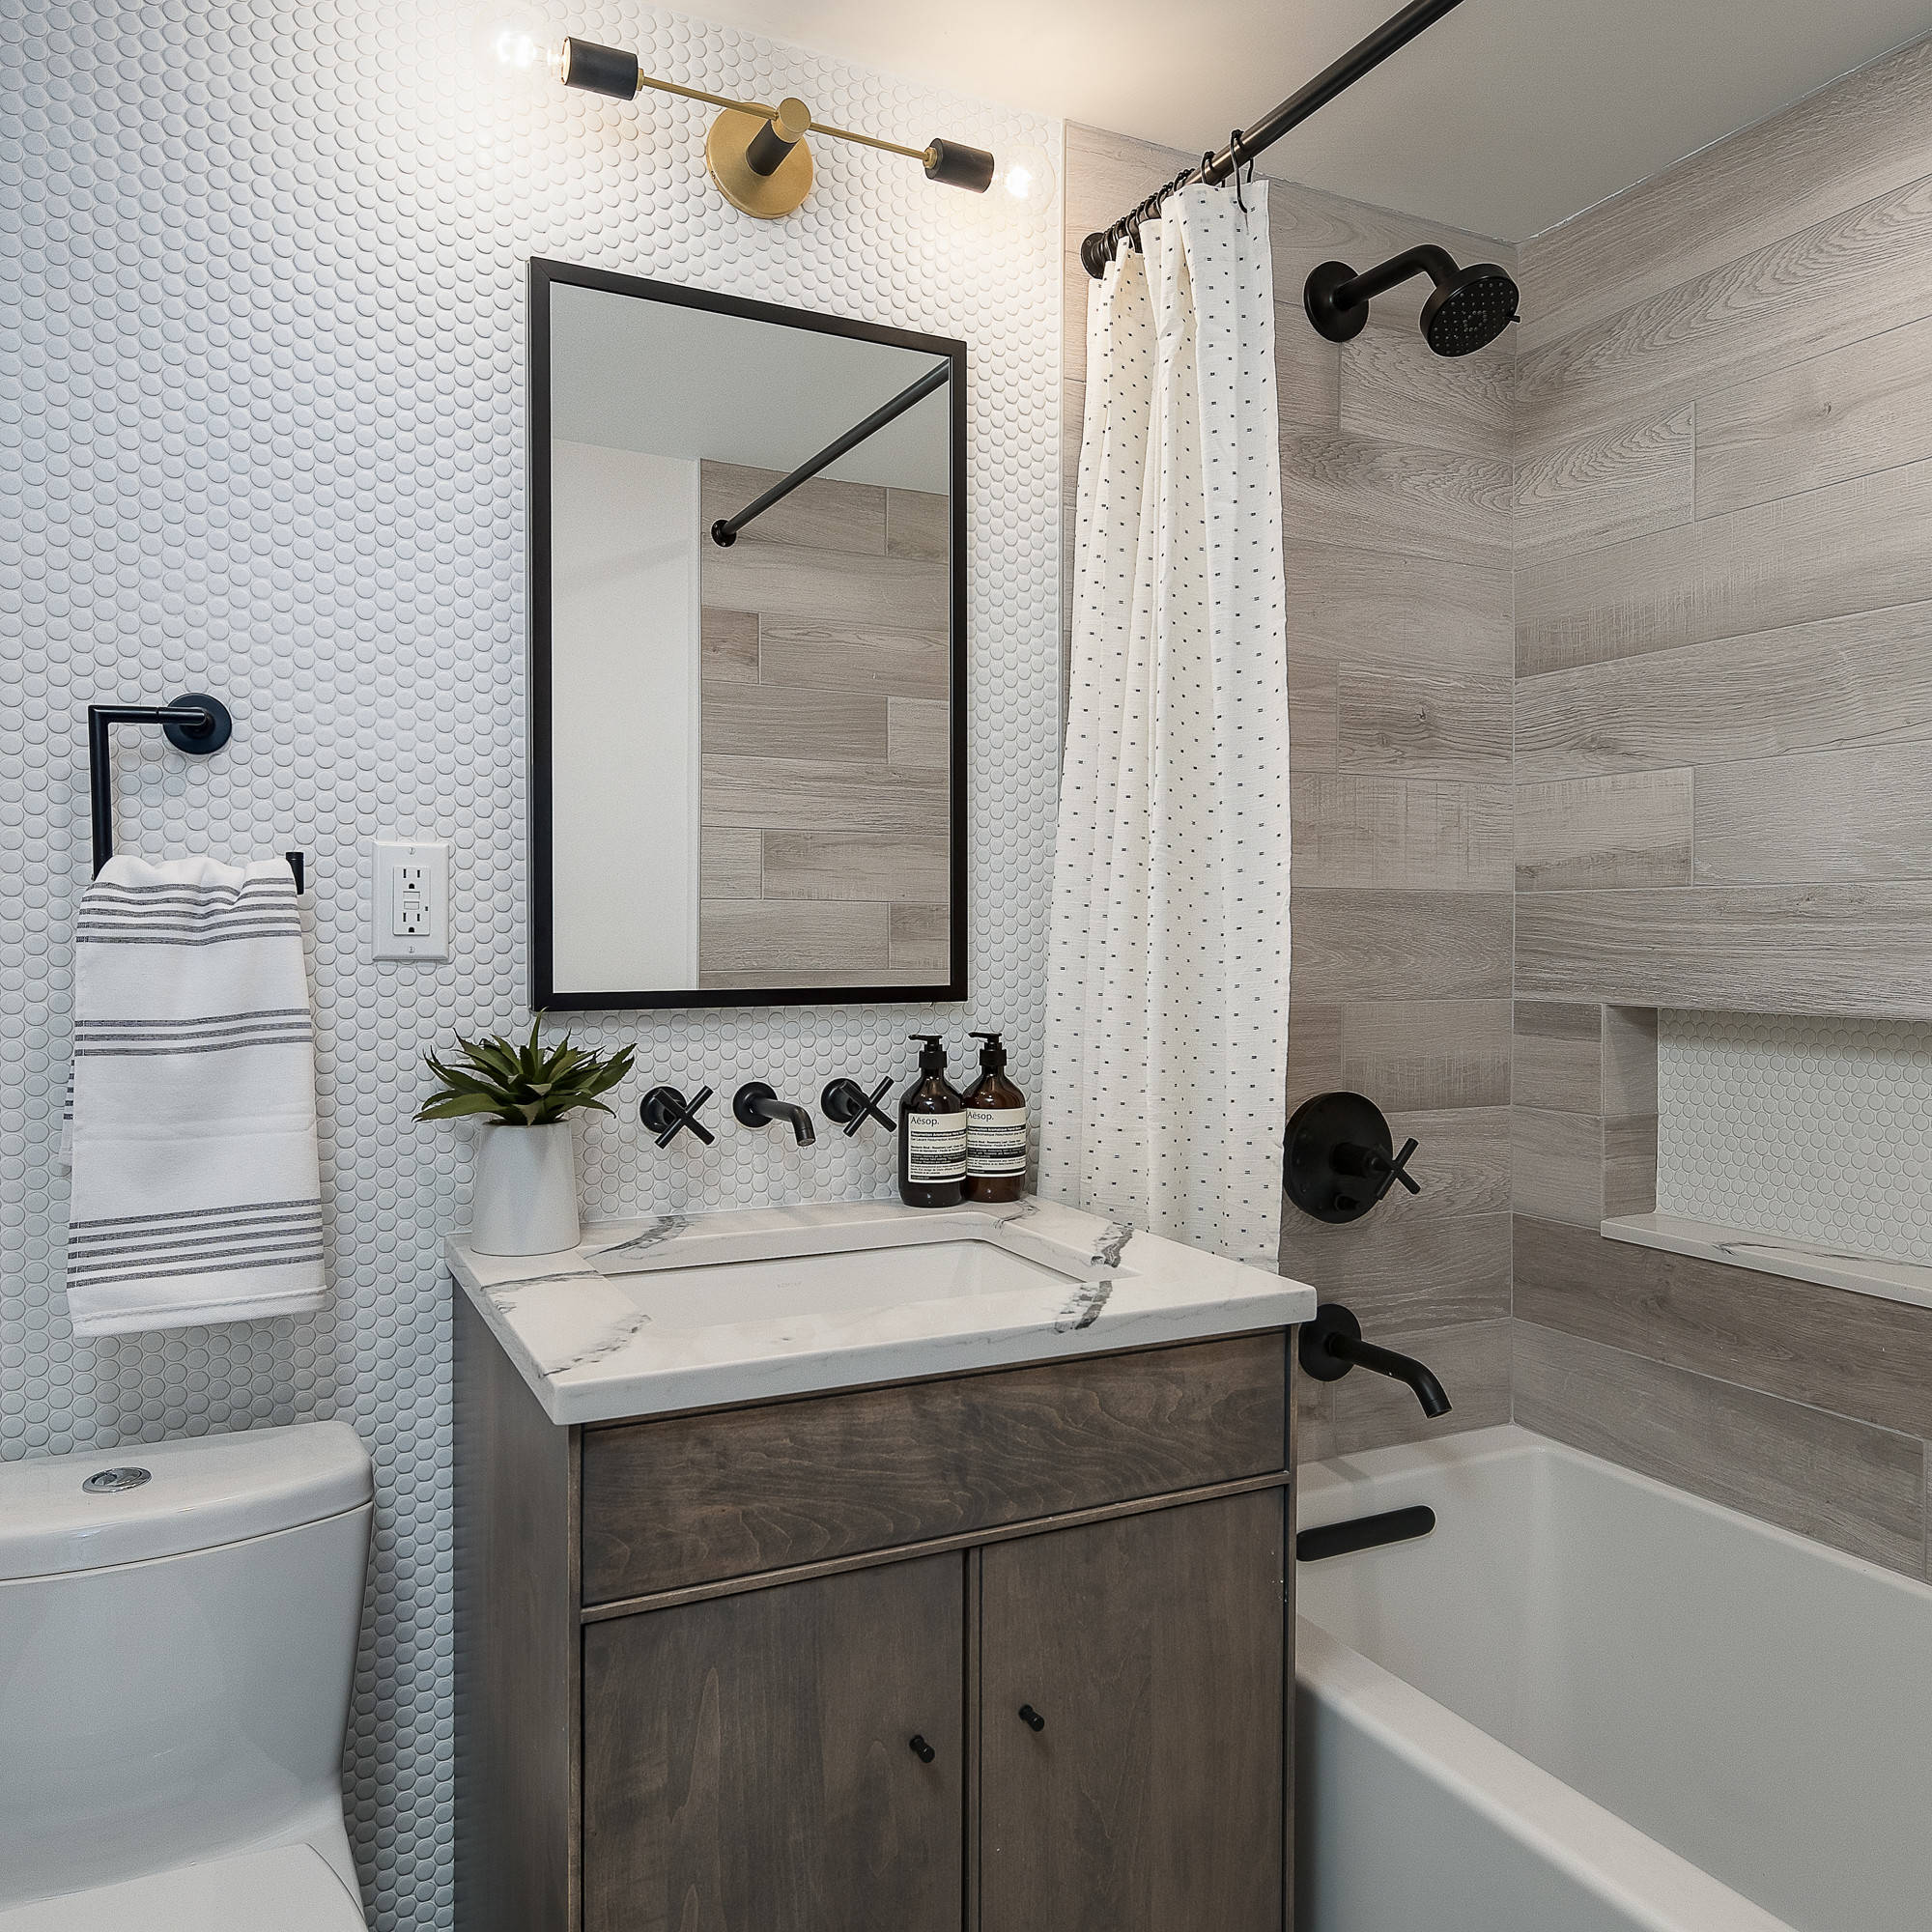 Shower Curtain Pictures Ideas, Guest Bathroom Shower Curtain Ideas